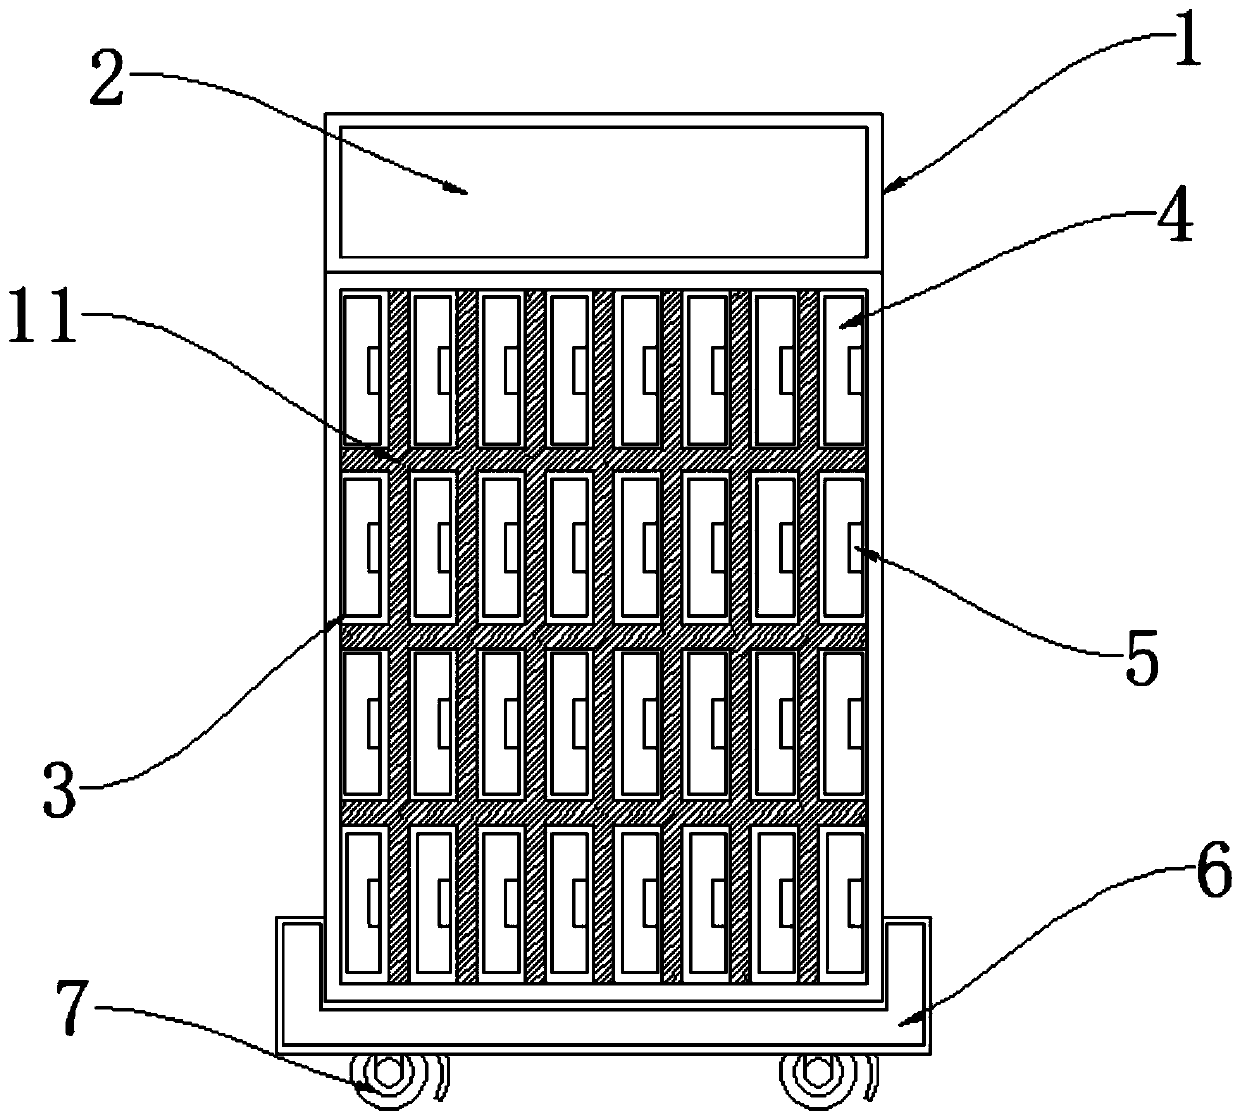 Electronic communication cabinet based on Internet of Things